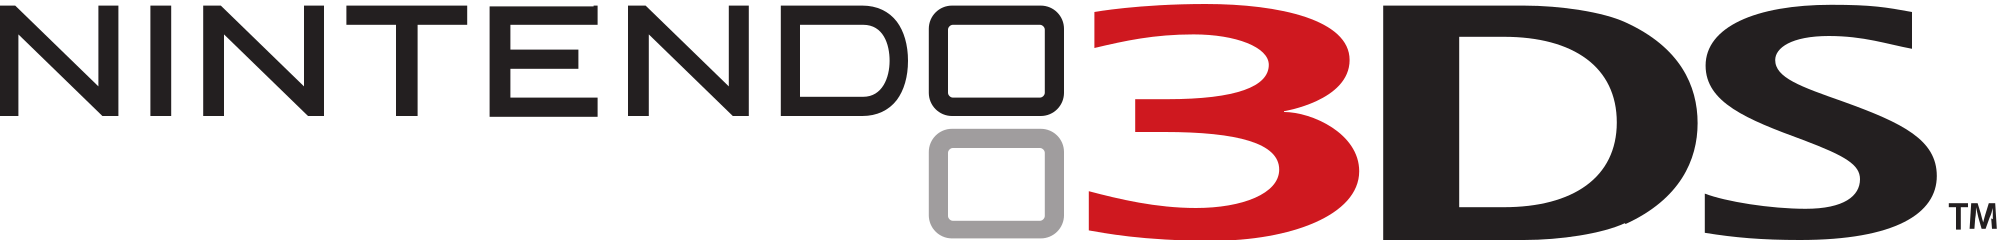 3DS Logo - Nintendo 3DS (logo).svg